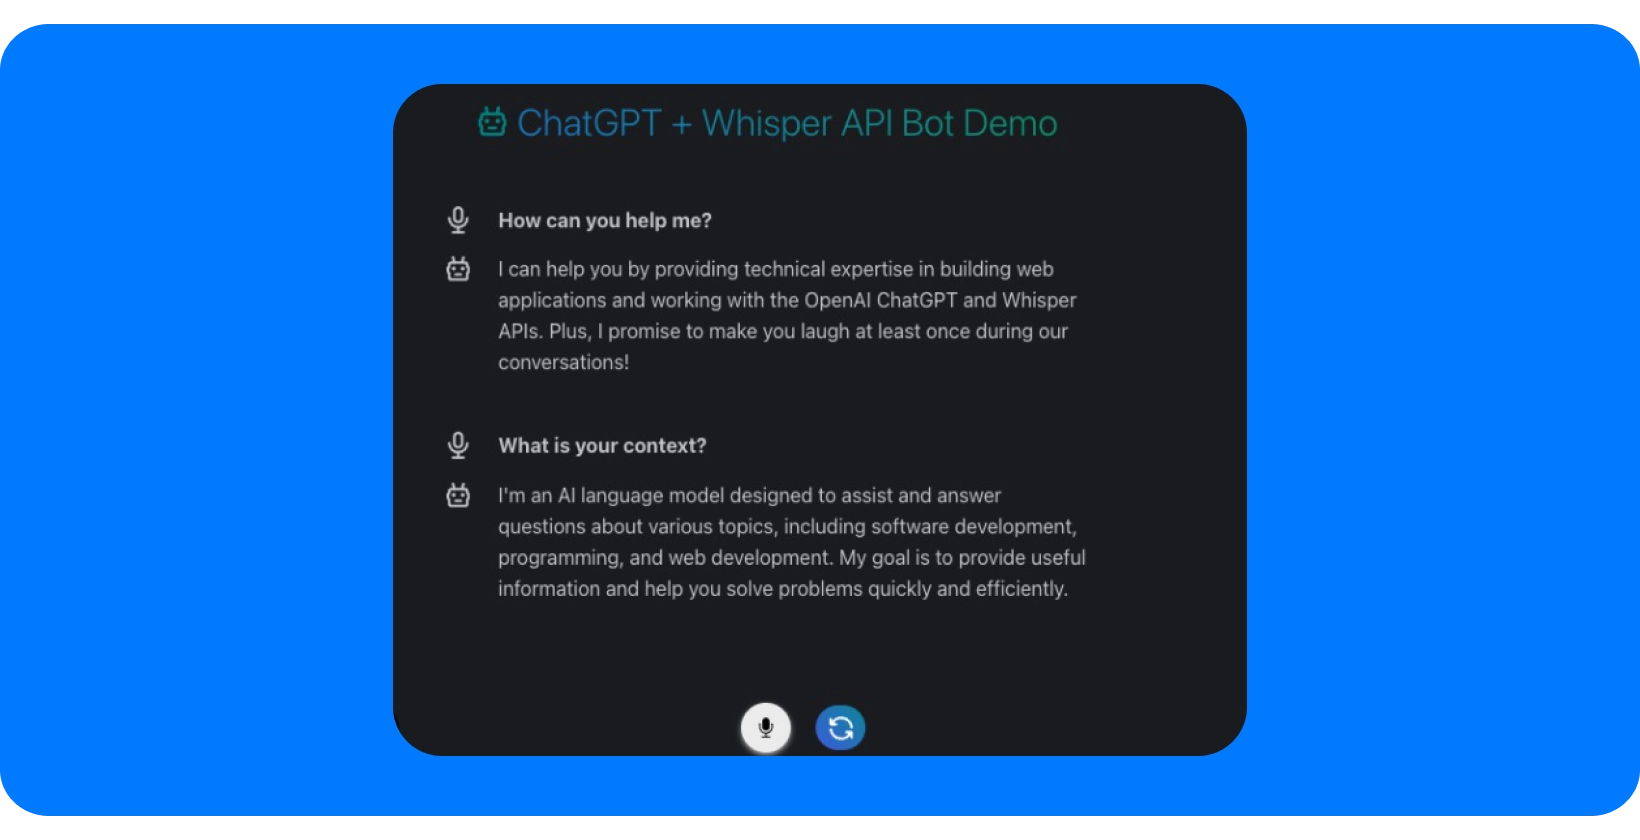 Tangkapan skrin ChatGPT + Whisper API Bot Demo mempamerkan keupayaan bantuan perbualan.